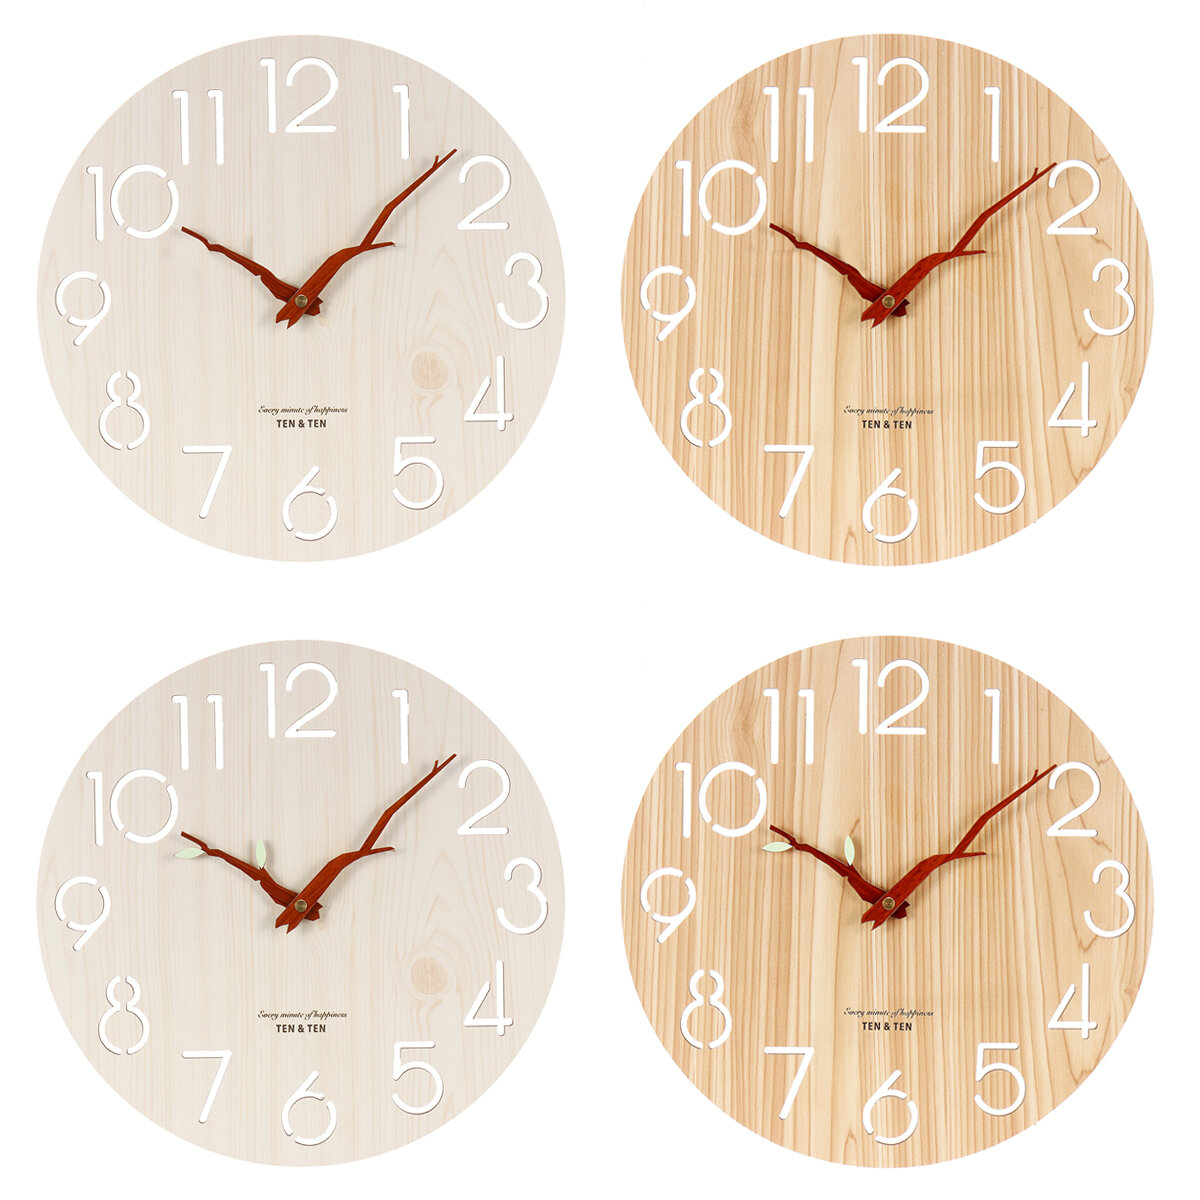 Luminous Leaves Wooden 3D Wall Clock Modern Design Nordic Children's Room Decoration Kitchen Clock Art Hollow Wall Watch